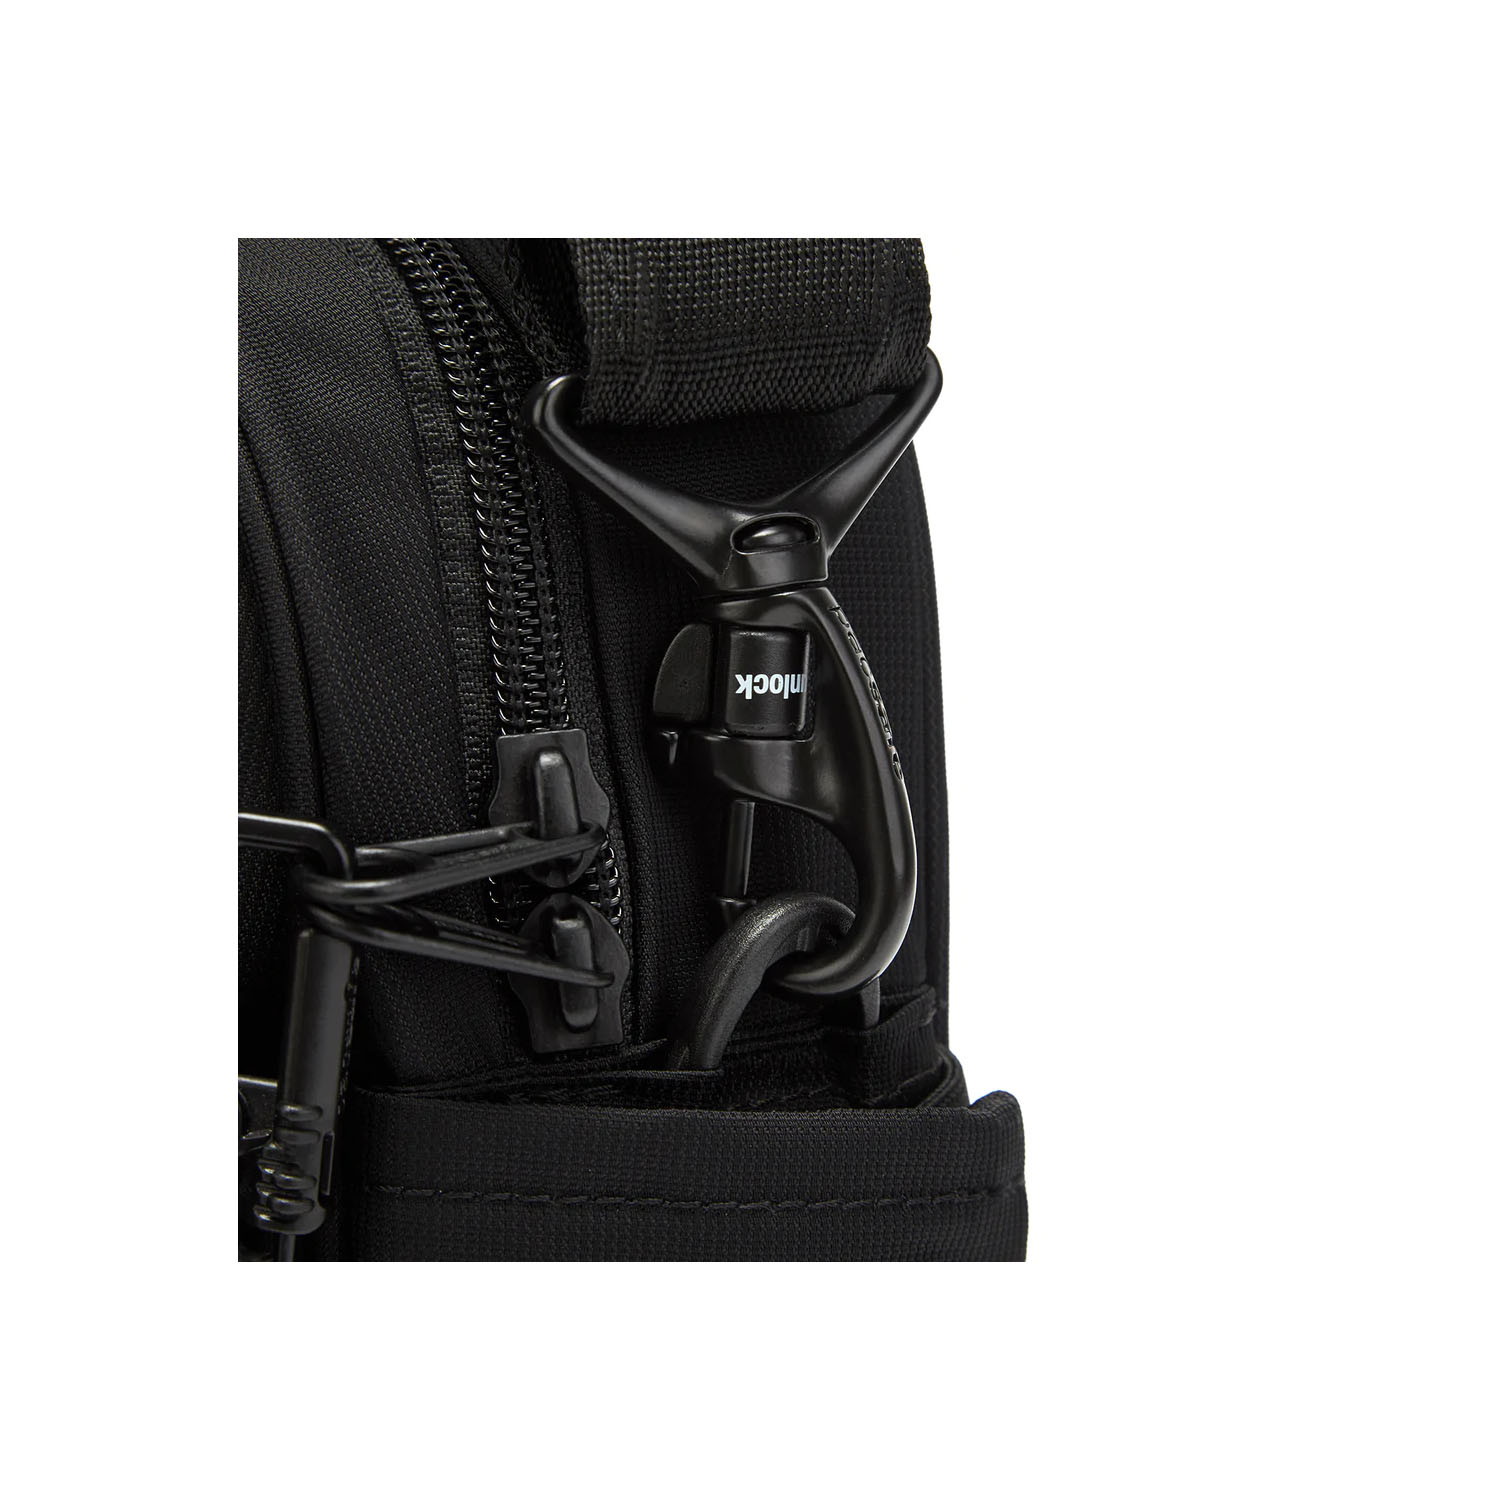 Anti-theft Crossbody Bag  Metrosafe LS200 in Black by Pacsafe